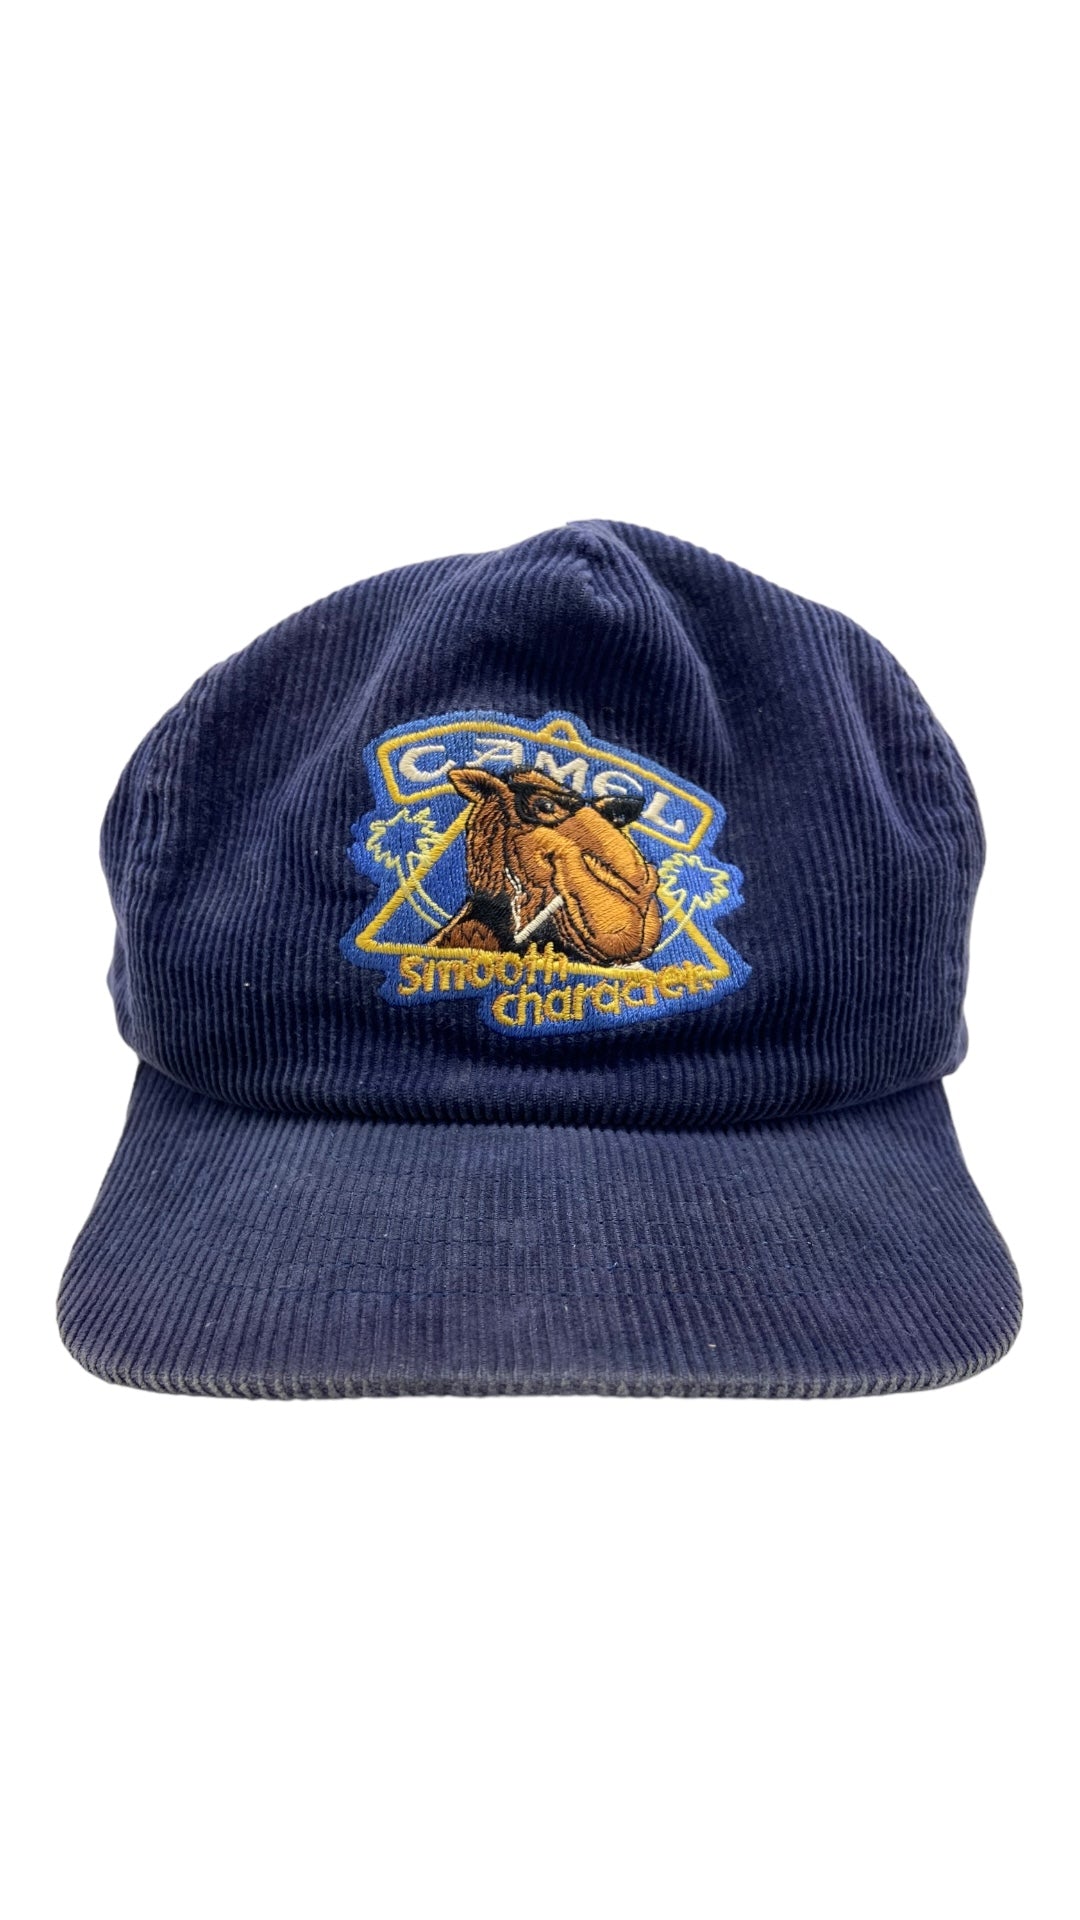 VTG Camel Smooth Character Corduroy Snapback Hat